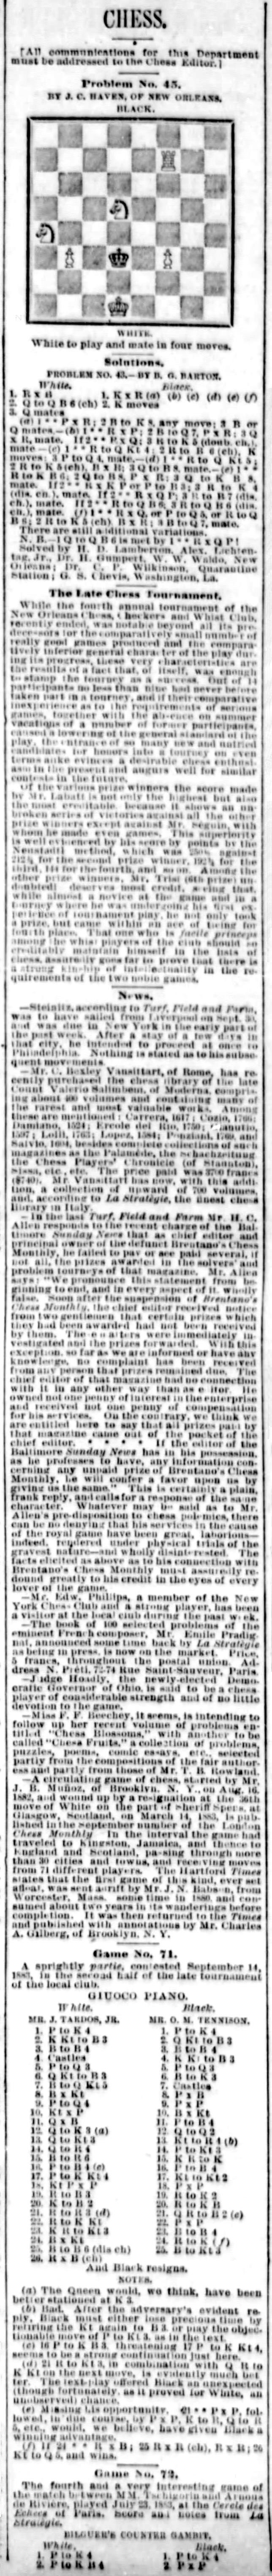 1883.10.14-01 New Orleans Times-Democrat.jpg